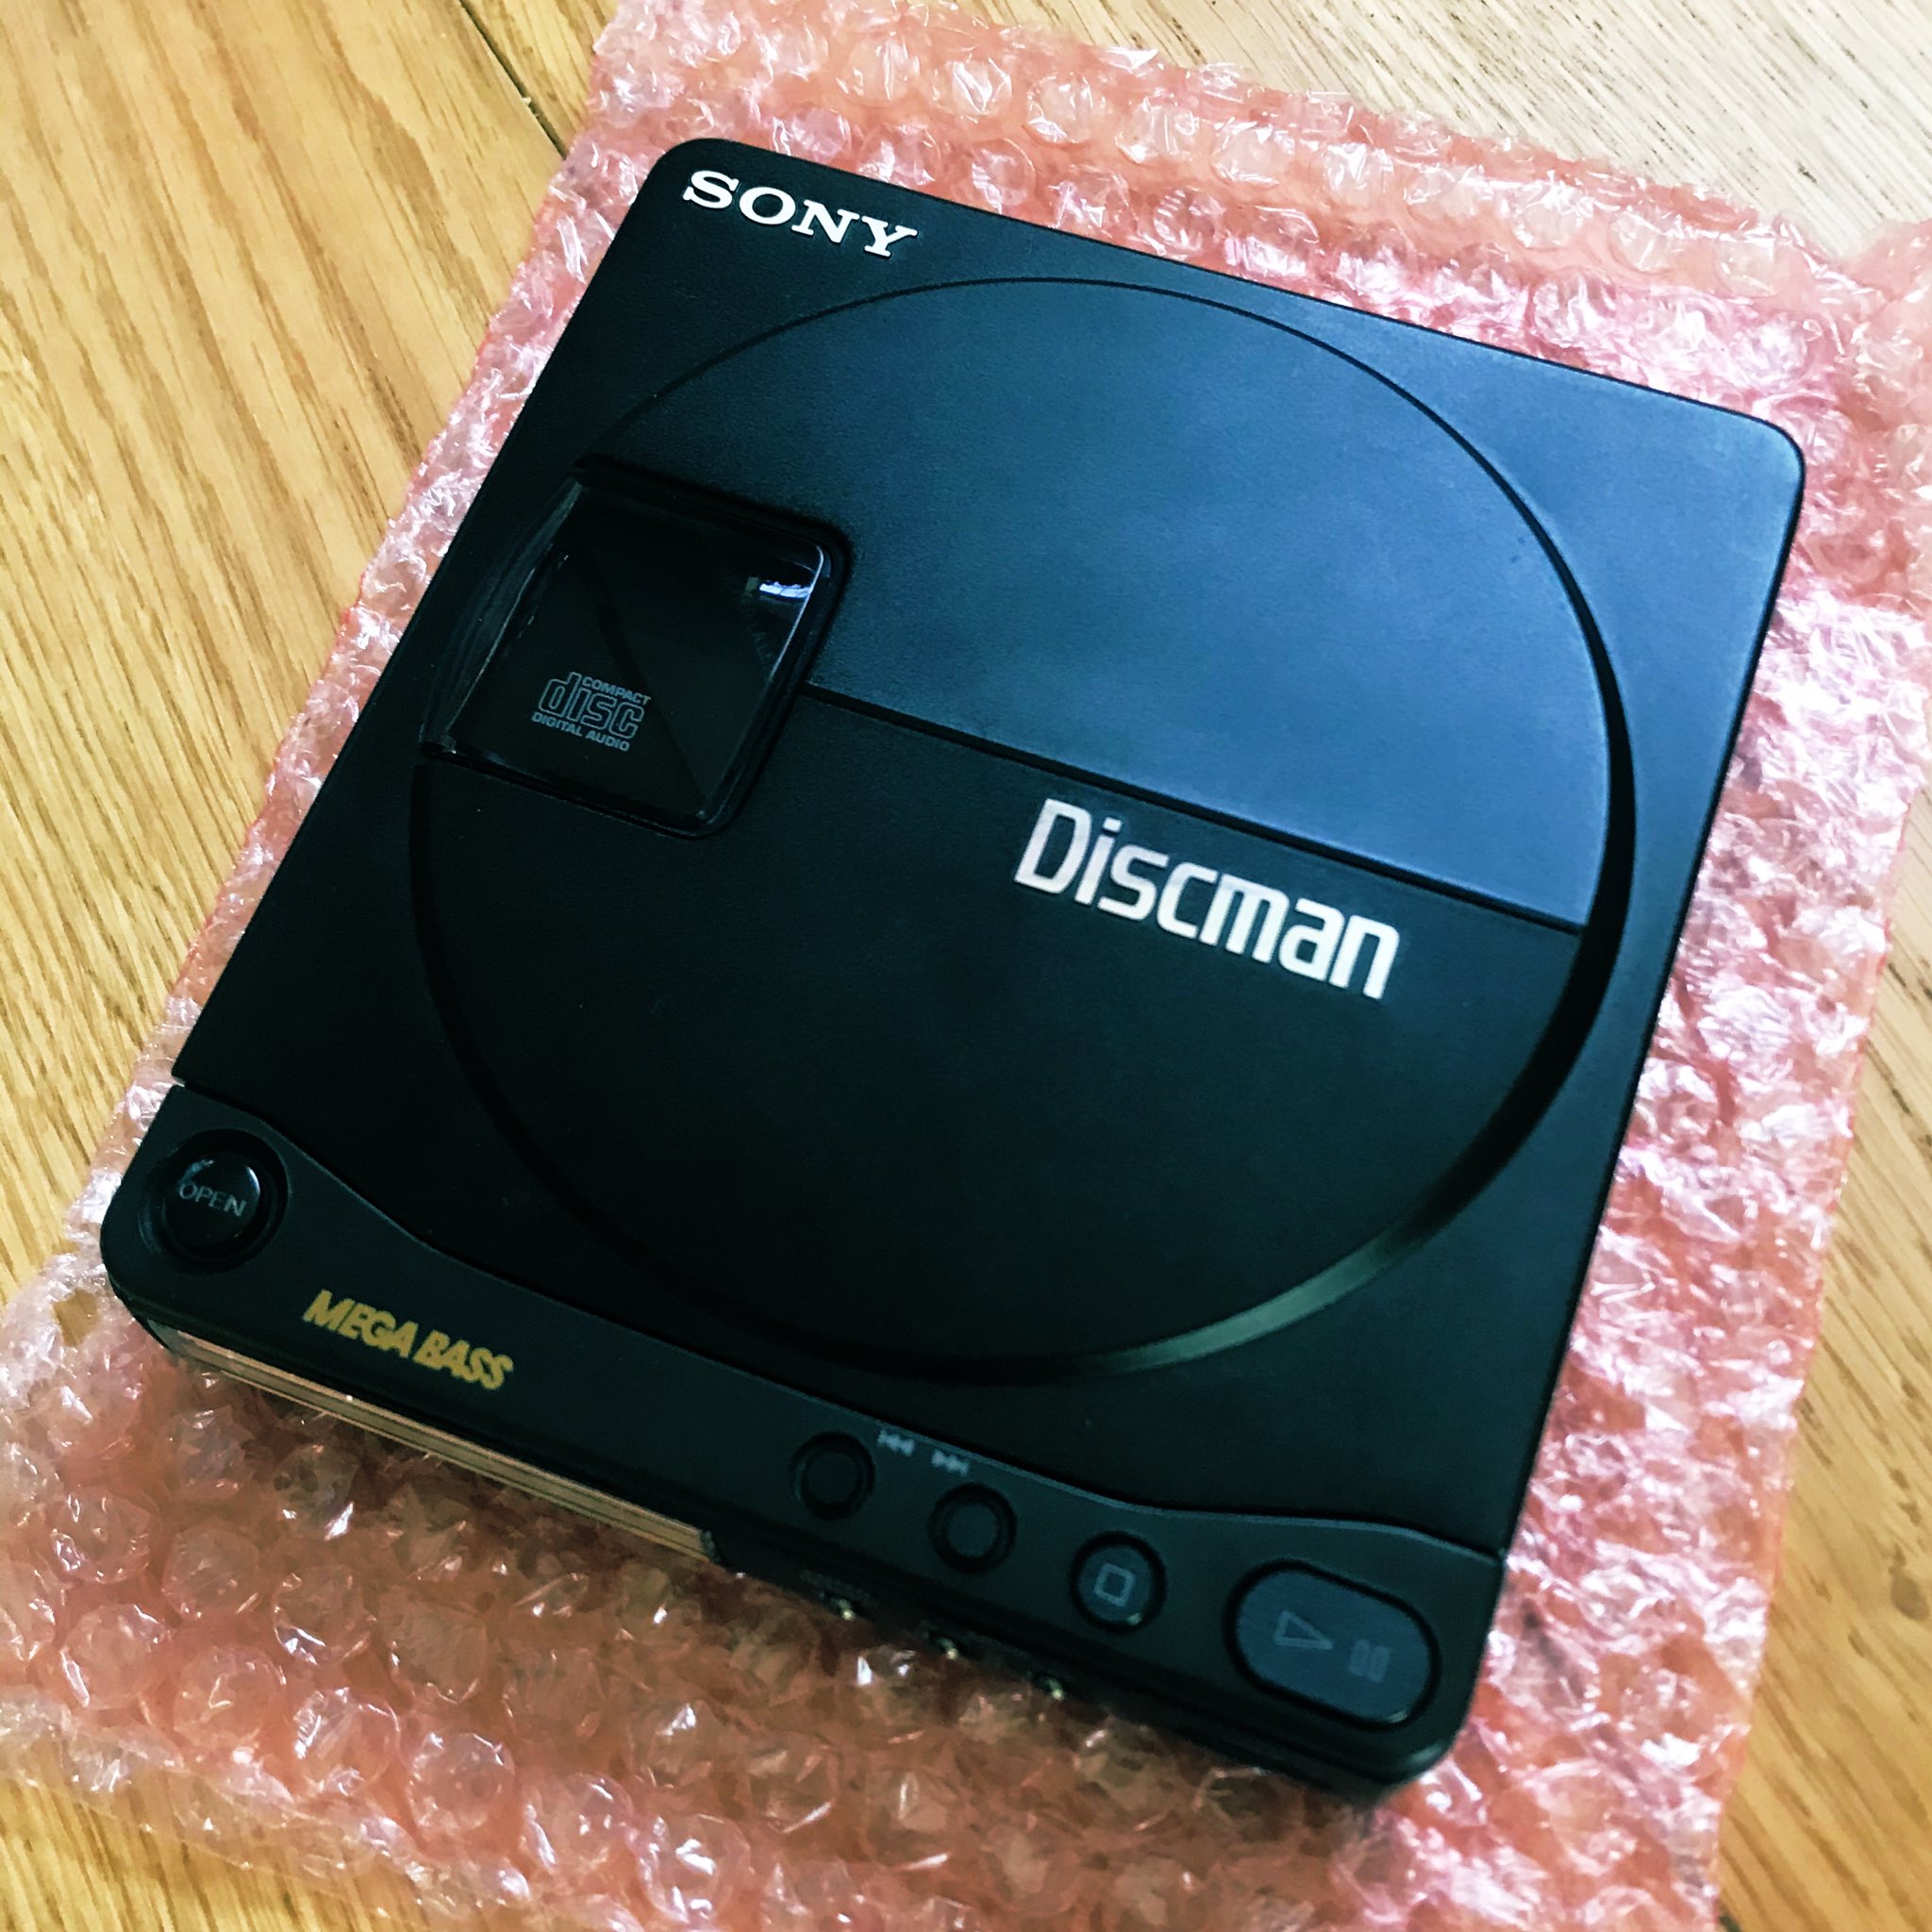 Sony Discman D-9 Portable CD Player